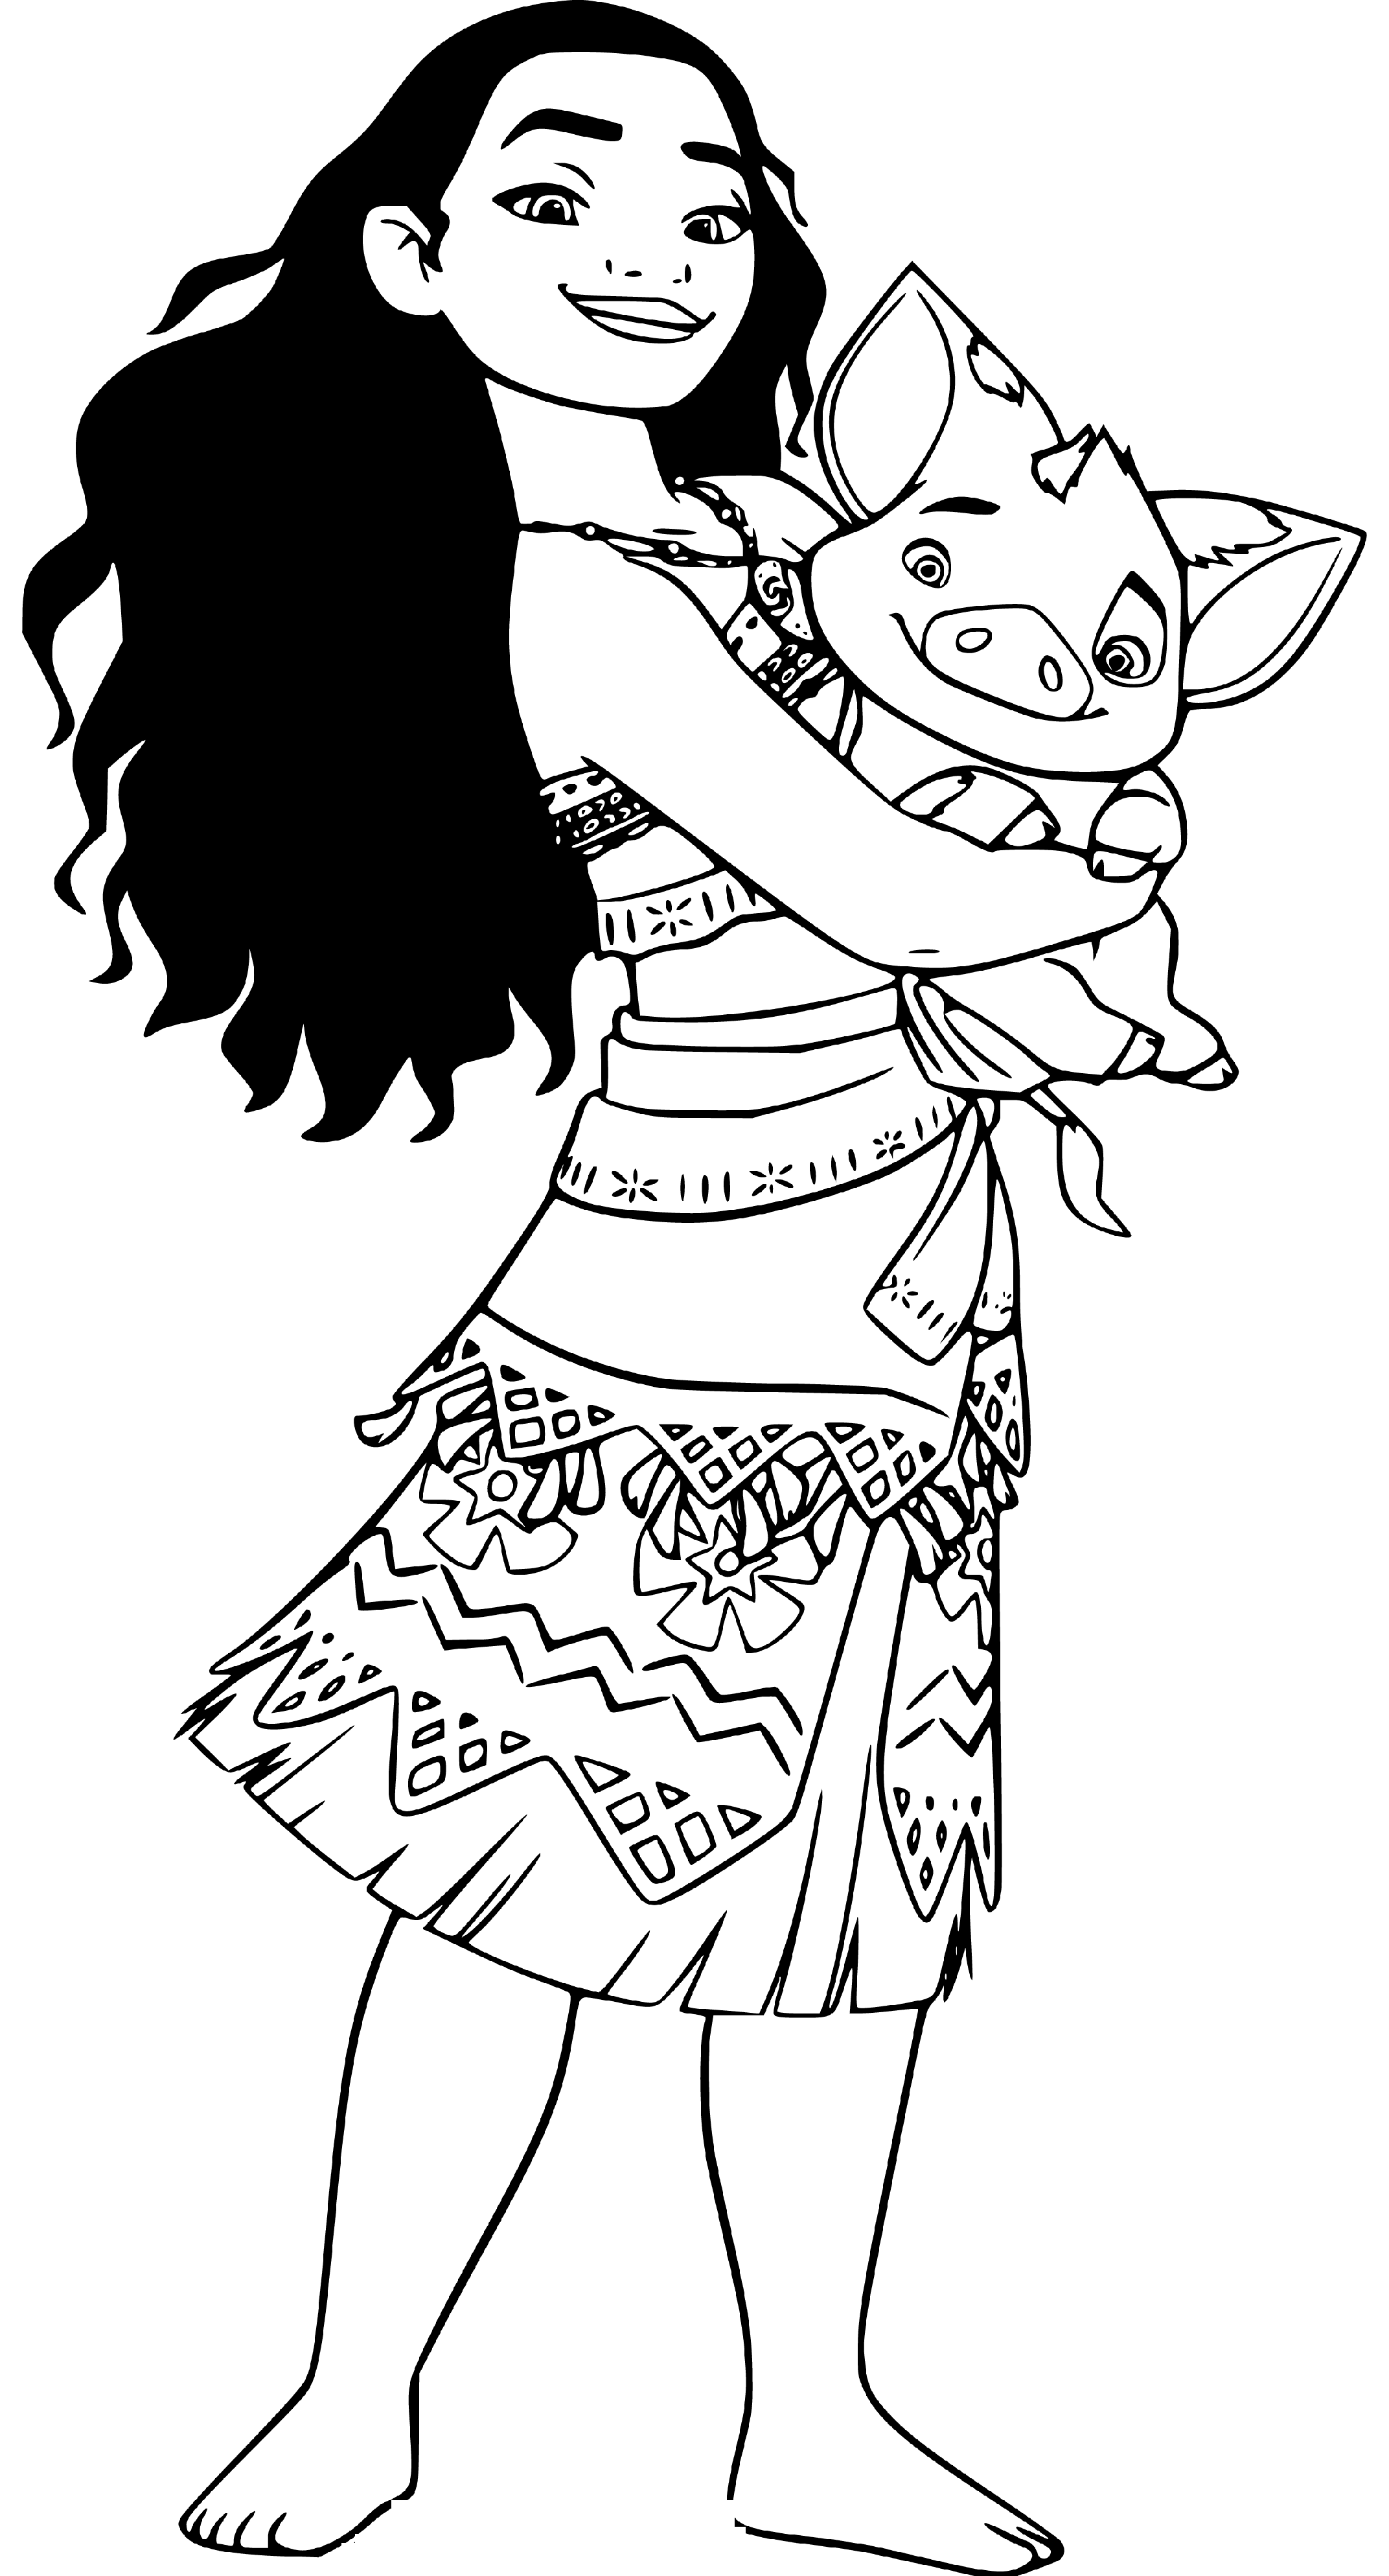 Moana and Pua Coloring Page for Children - SheetalColor.com